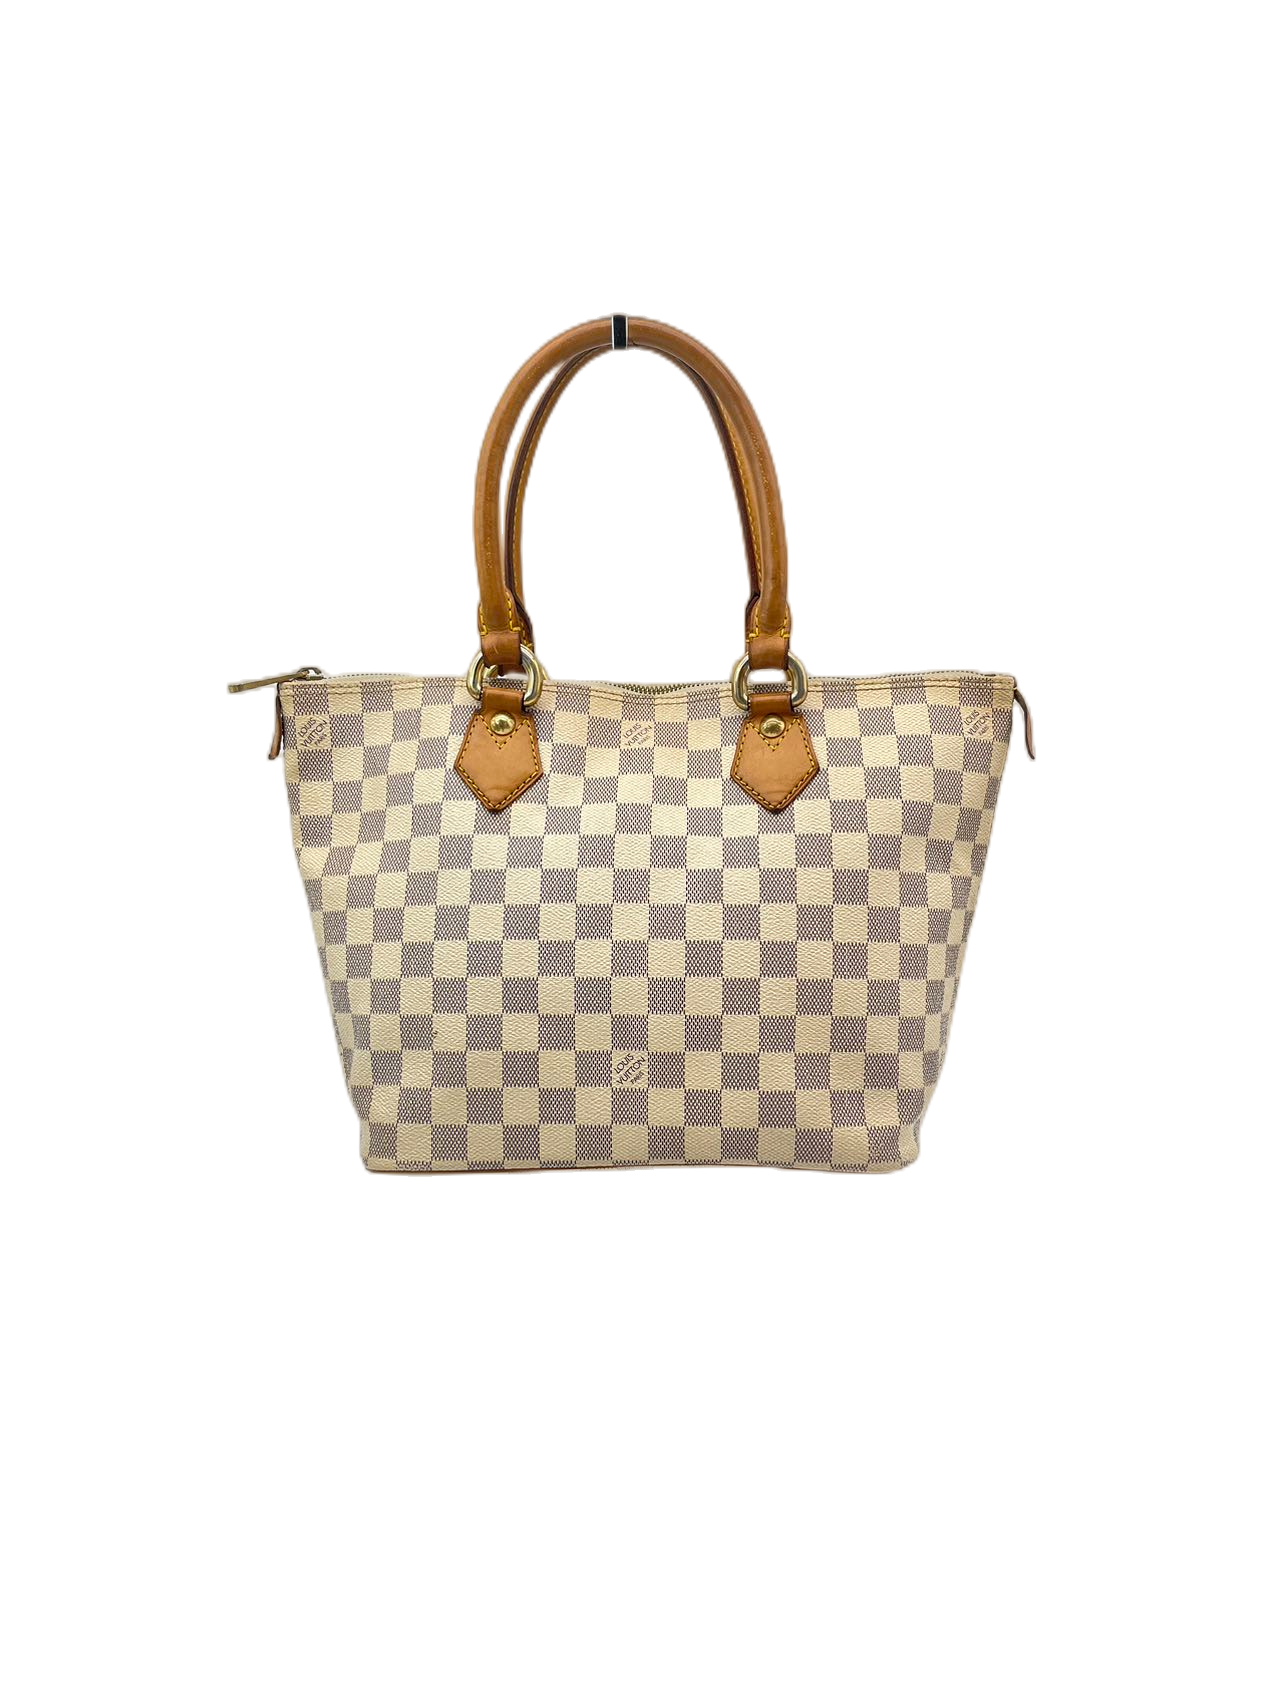 Preloved Louis Vuitton Damier Azur Small Totes Shoulder bag